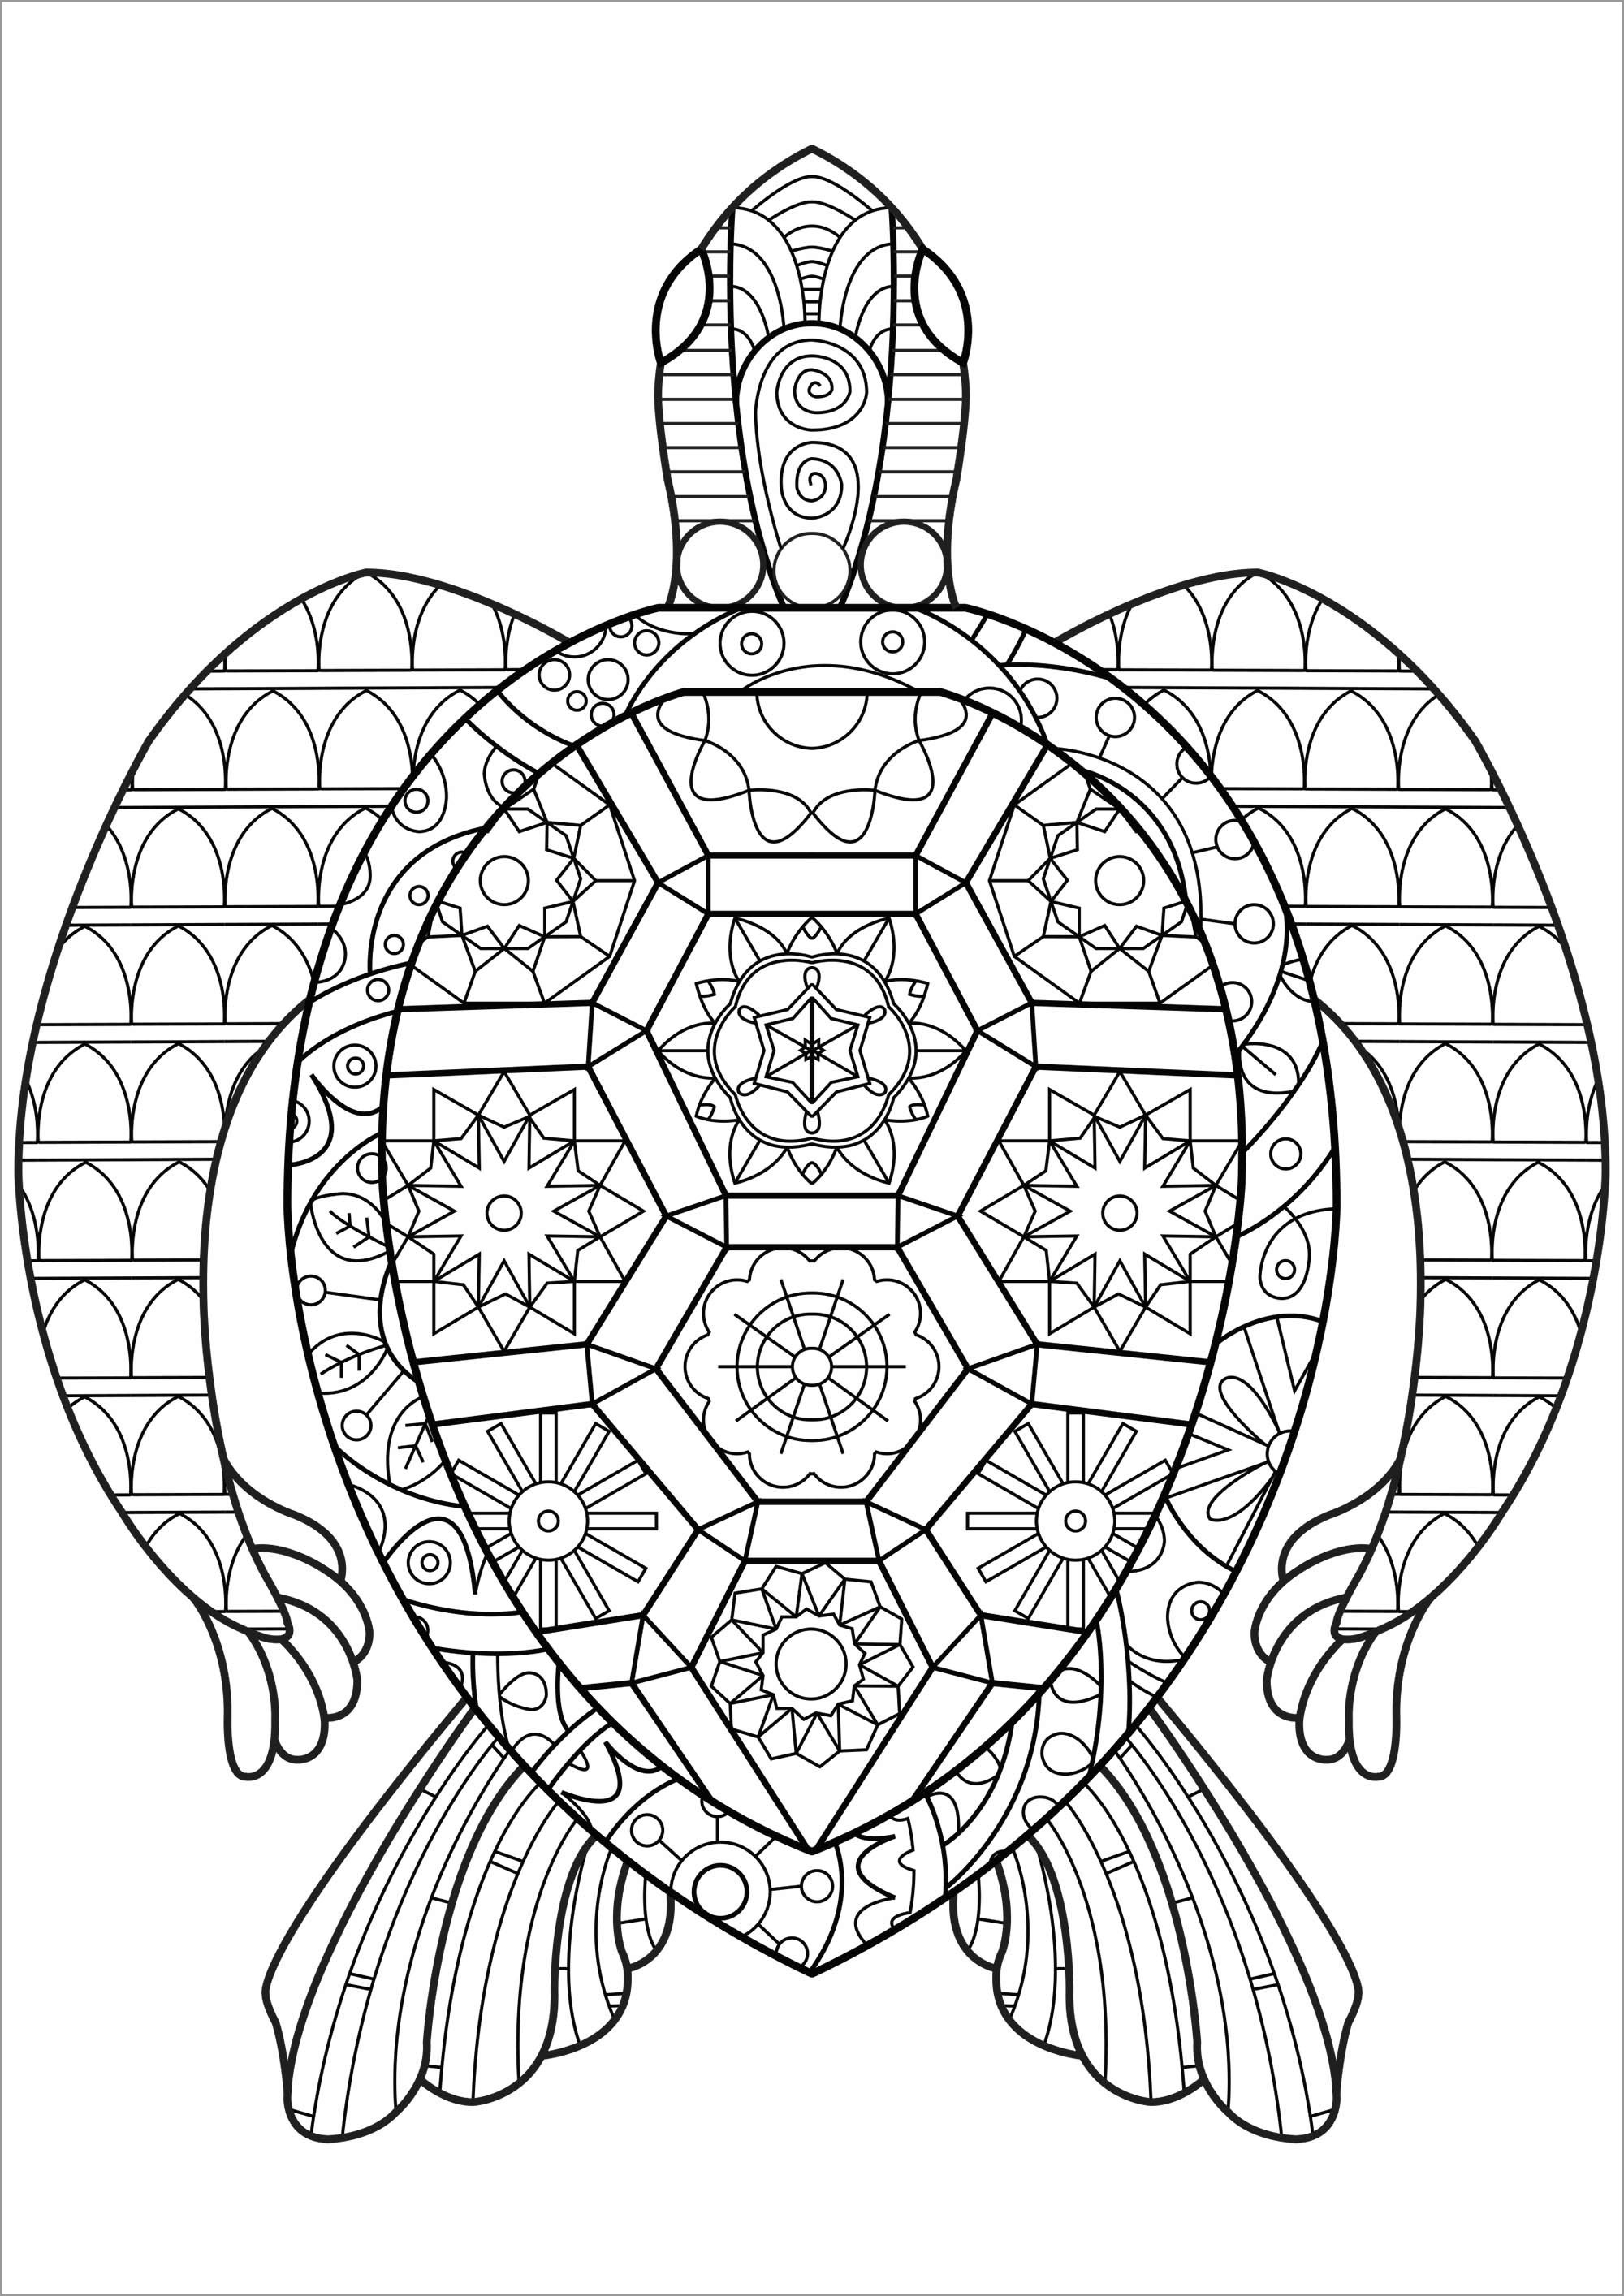 Printable Zentangle tortoise Coloring Page   ColoringBay